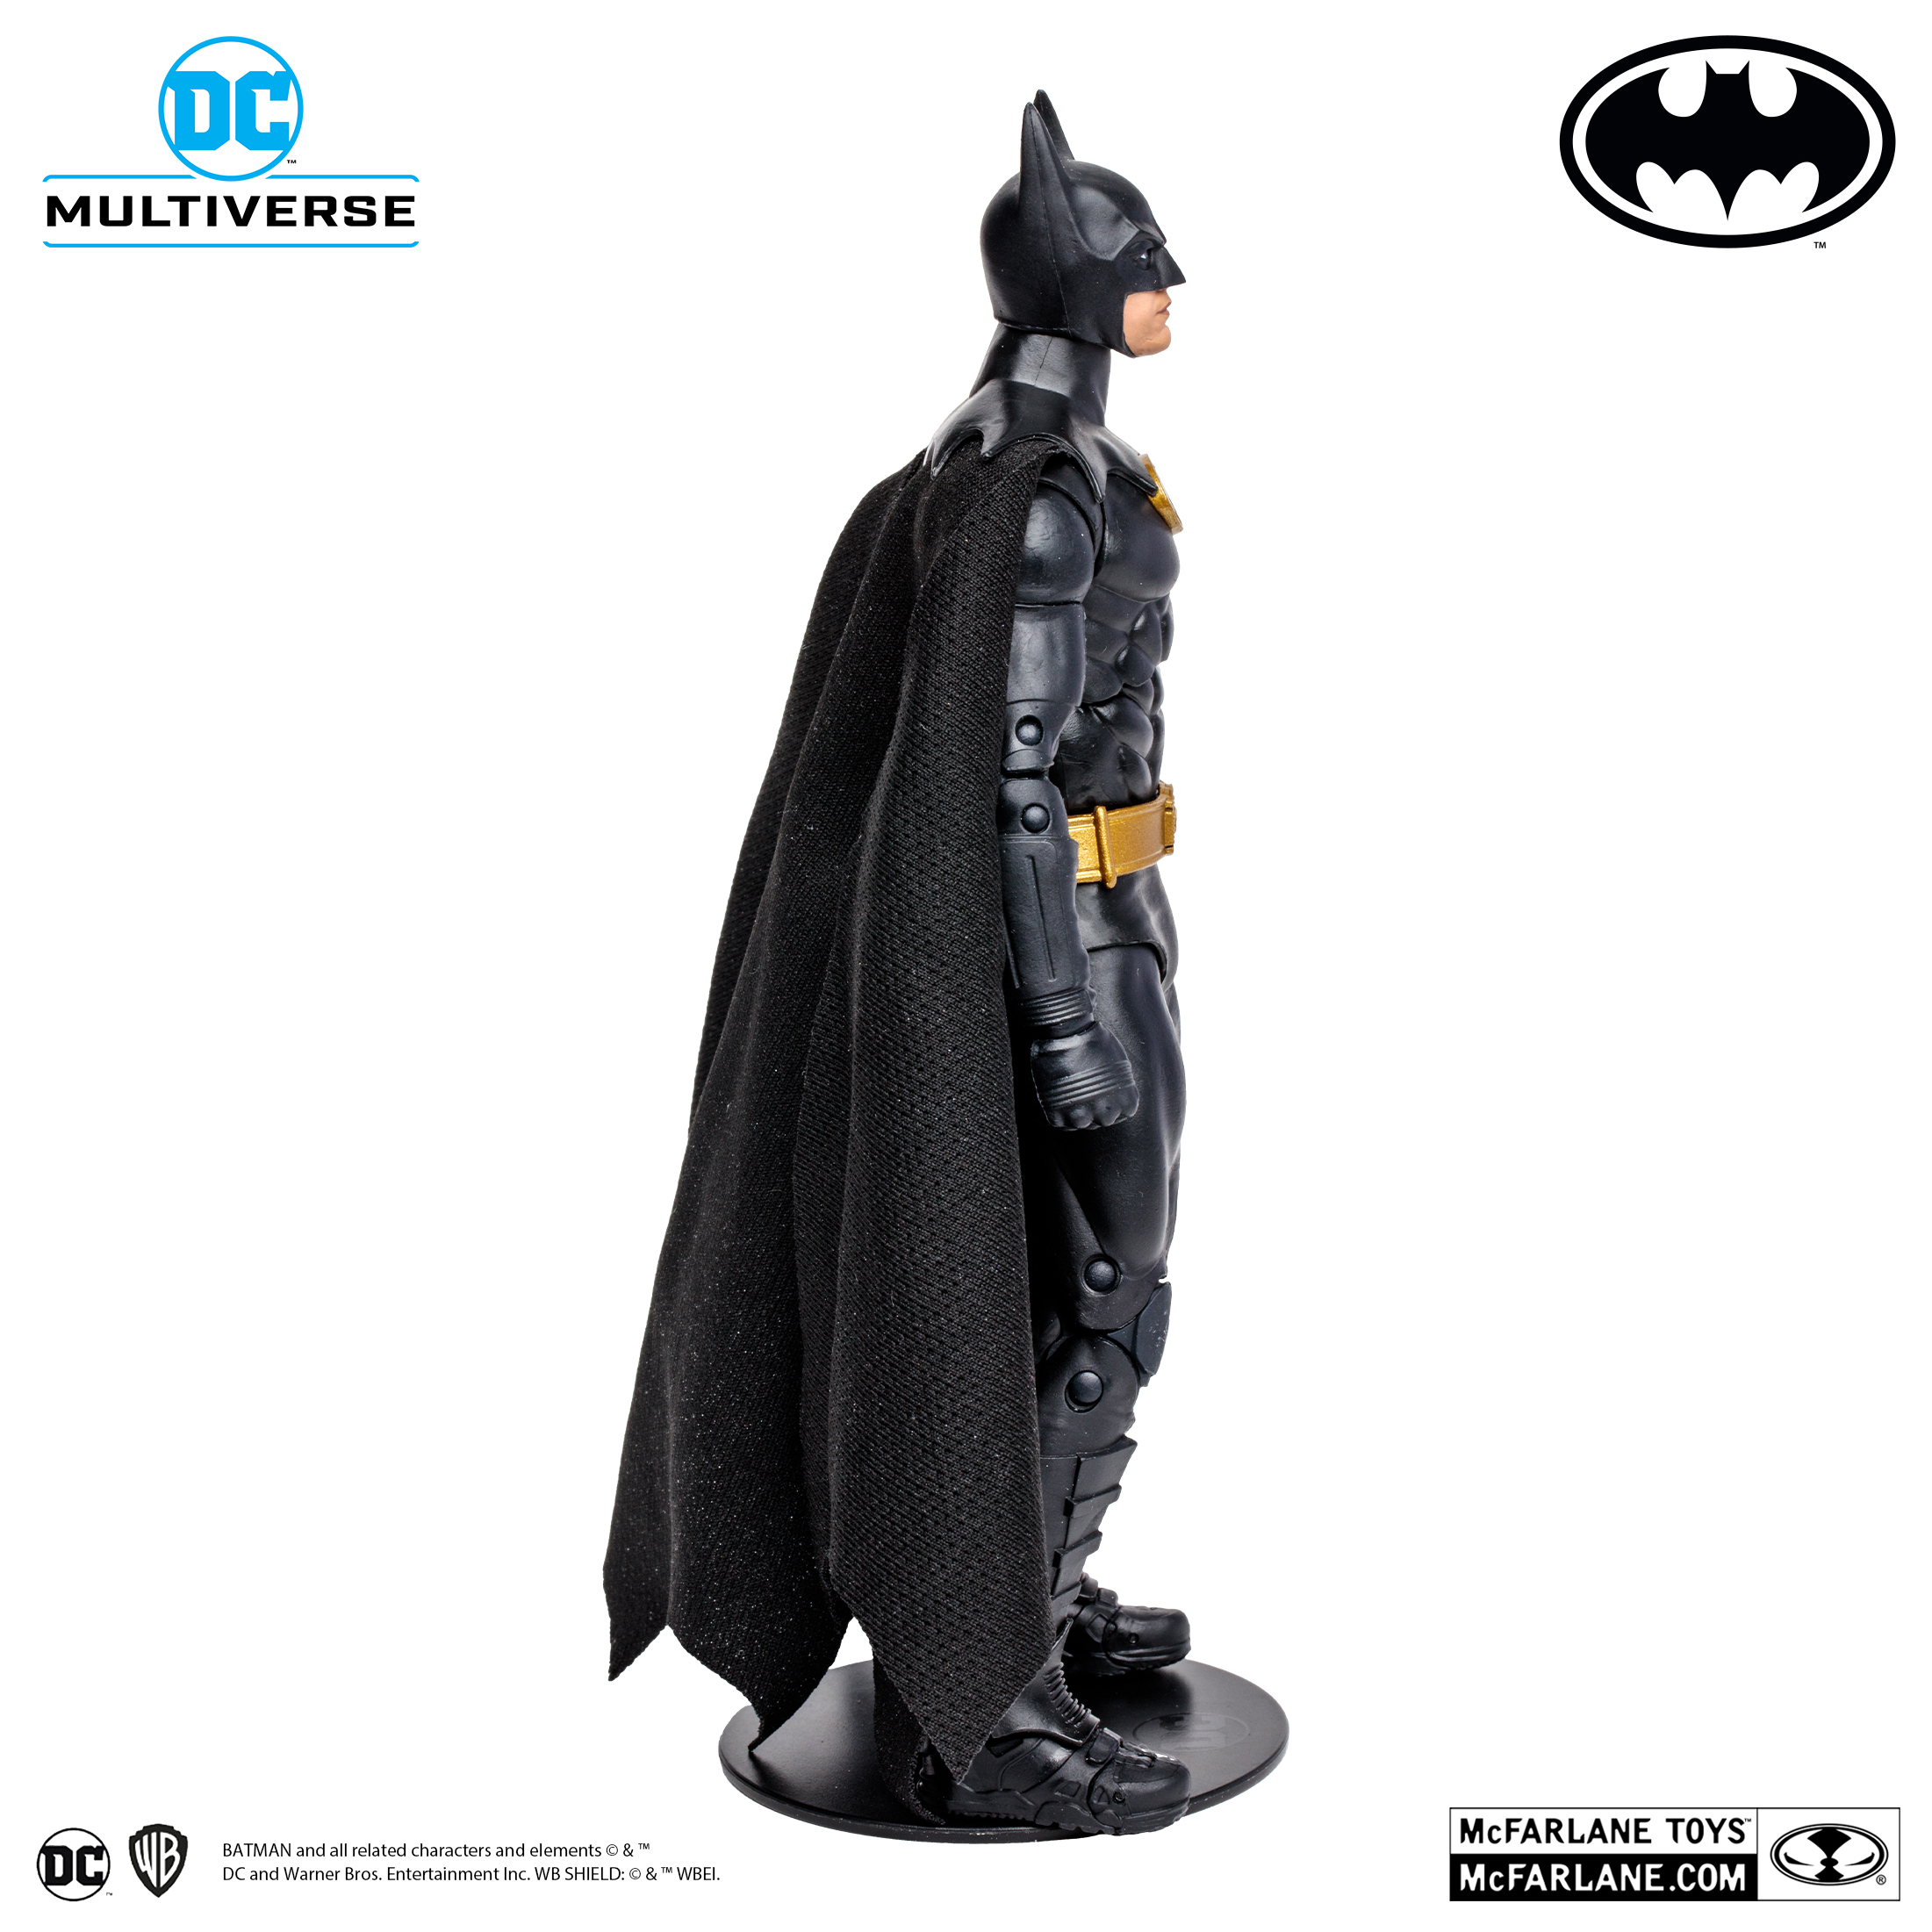 Pack Batmobile avec figurine Batman 30 cm